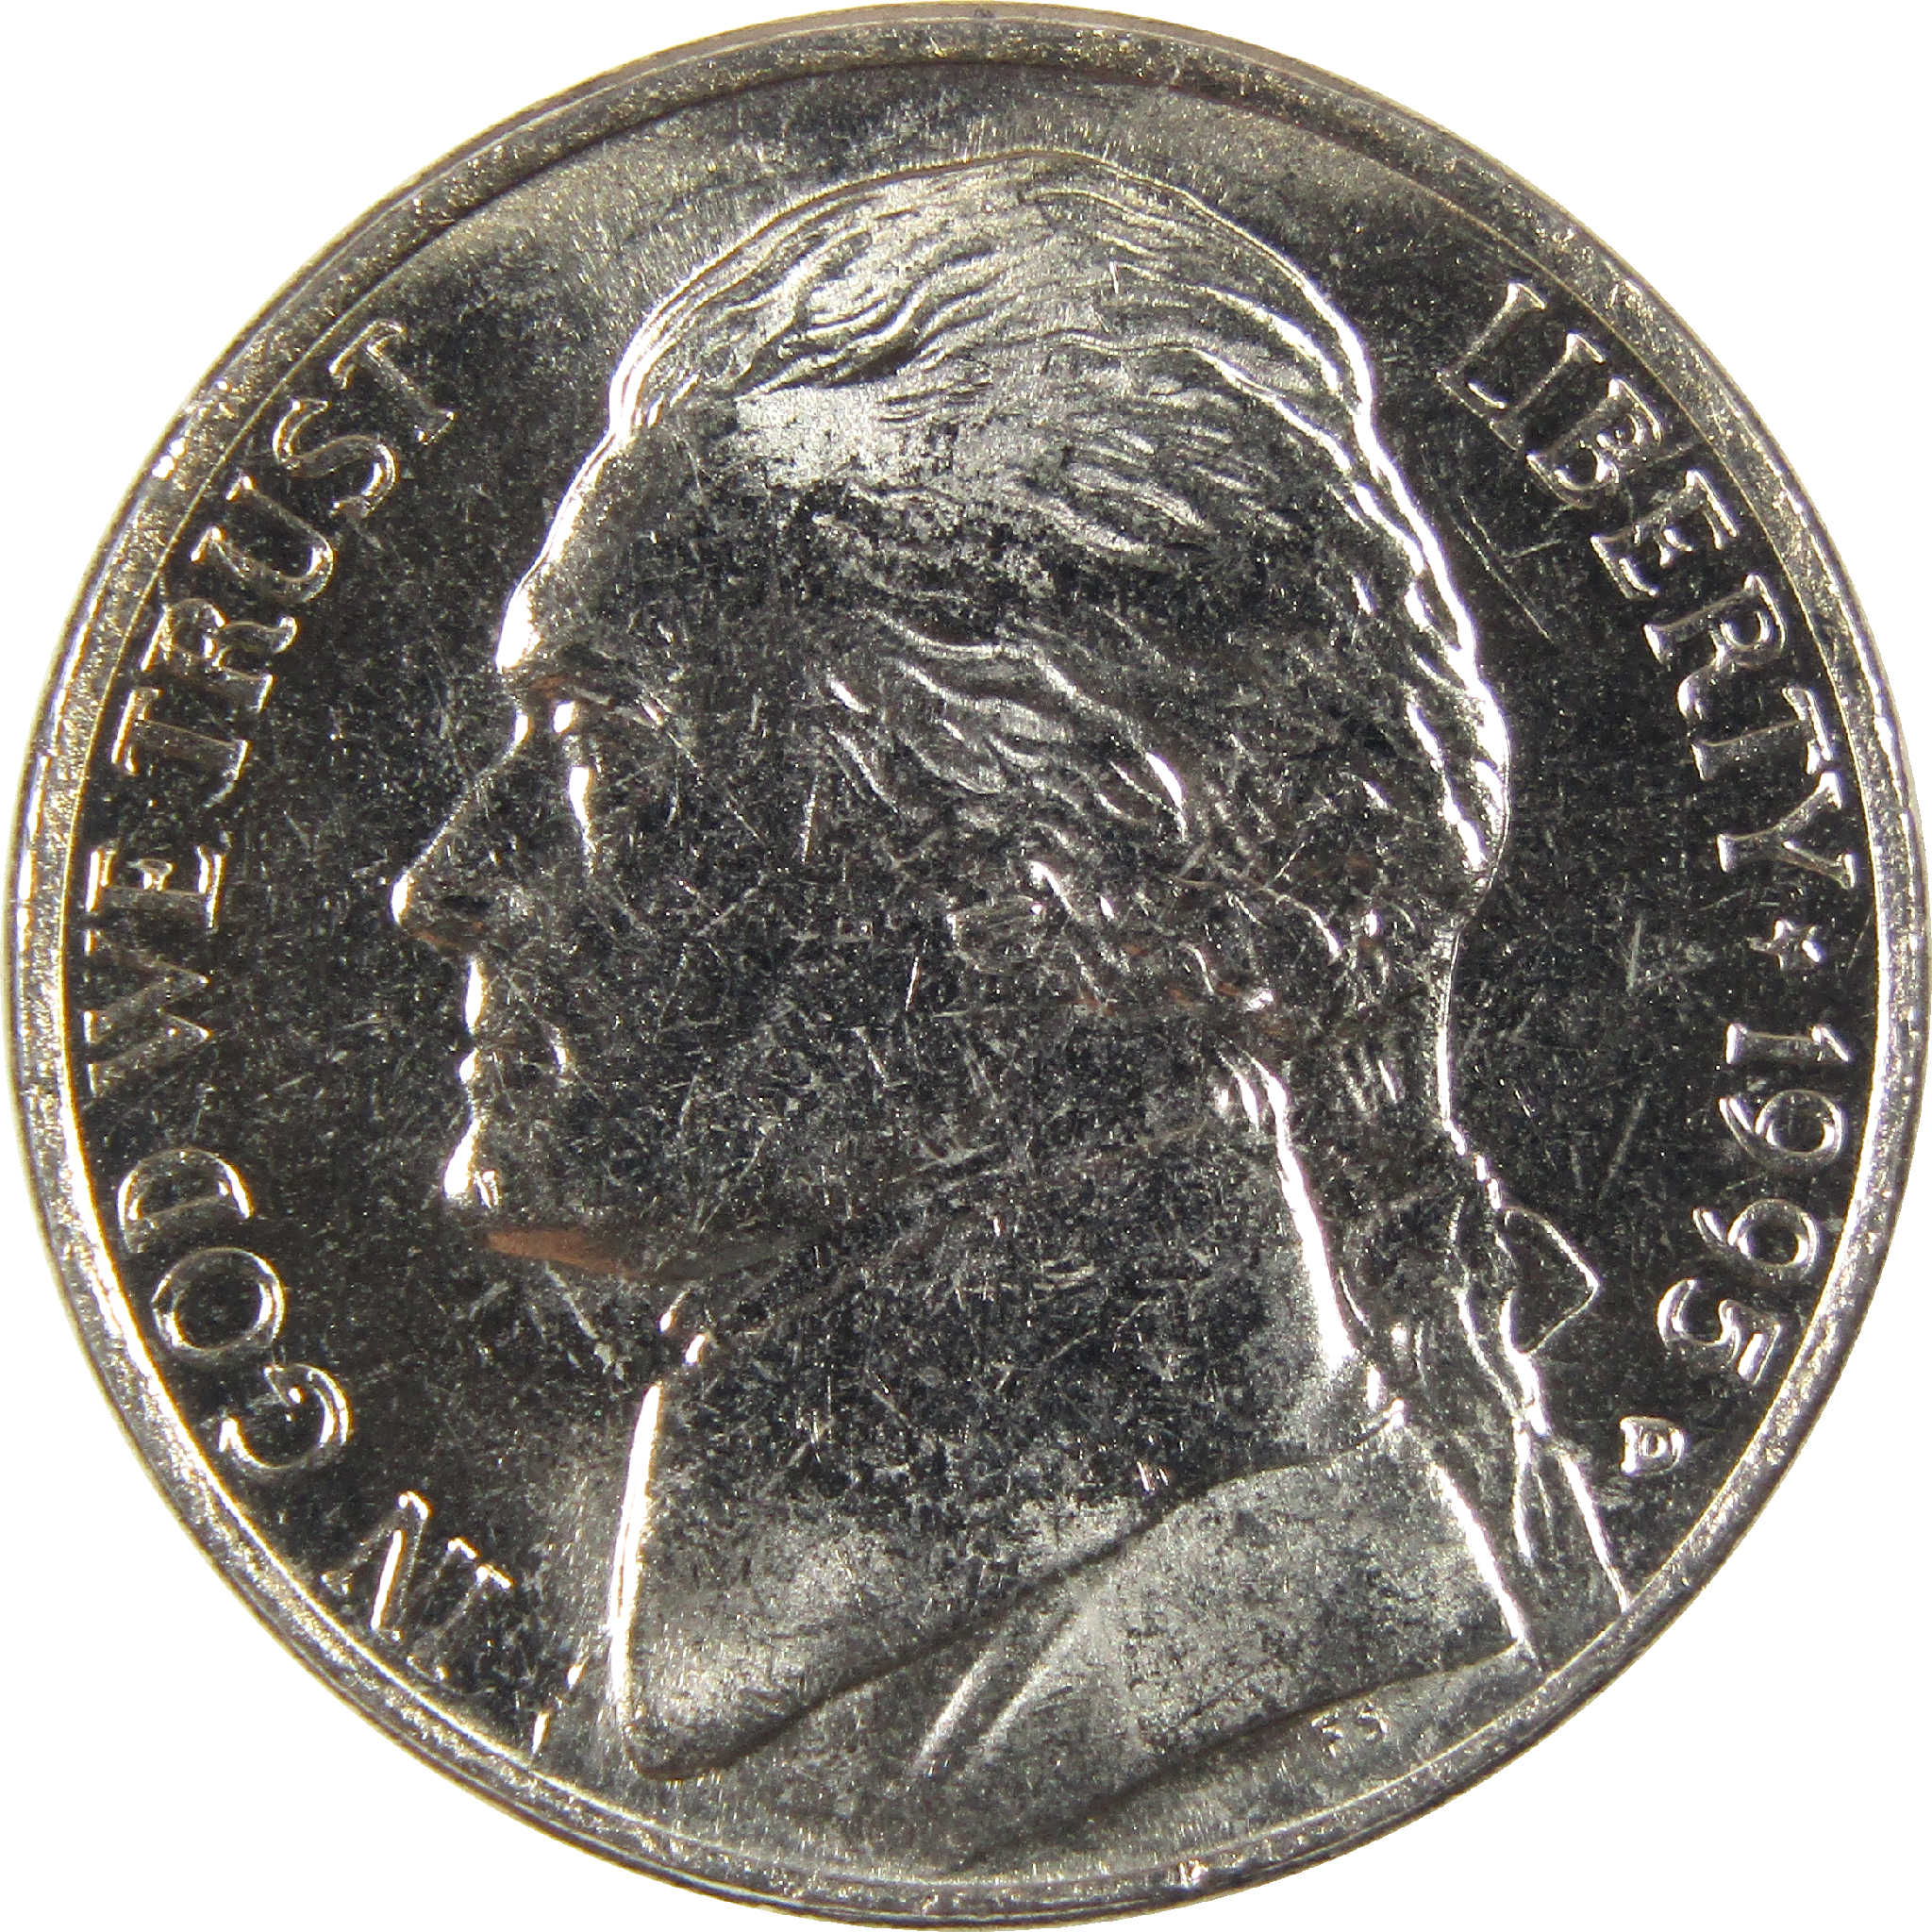 1995 D Jefferson Nickel Uncirculated 5c Coin